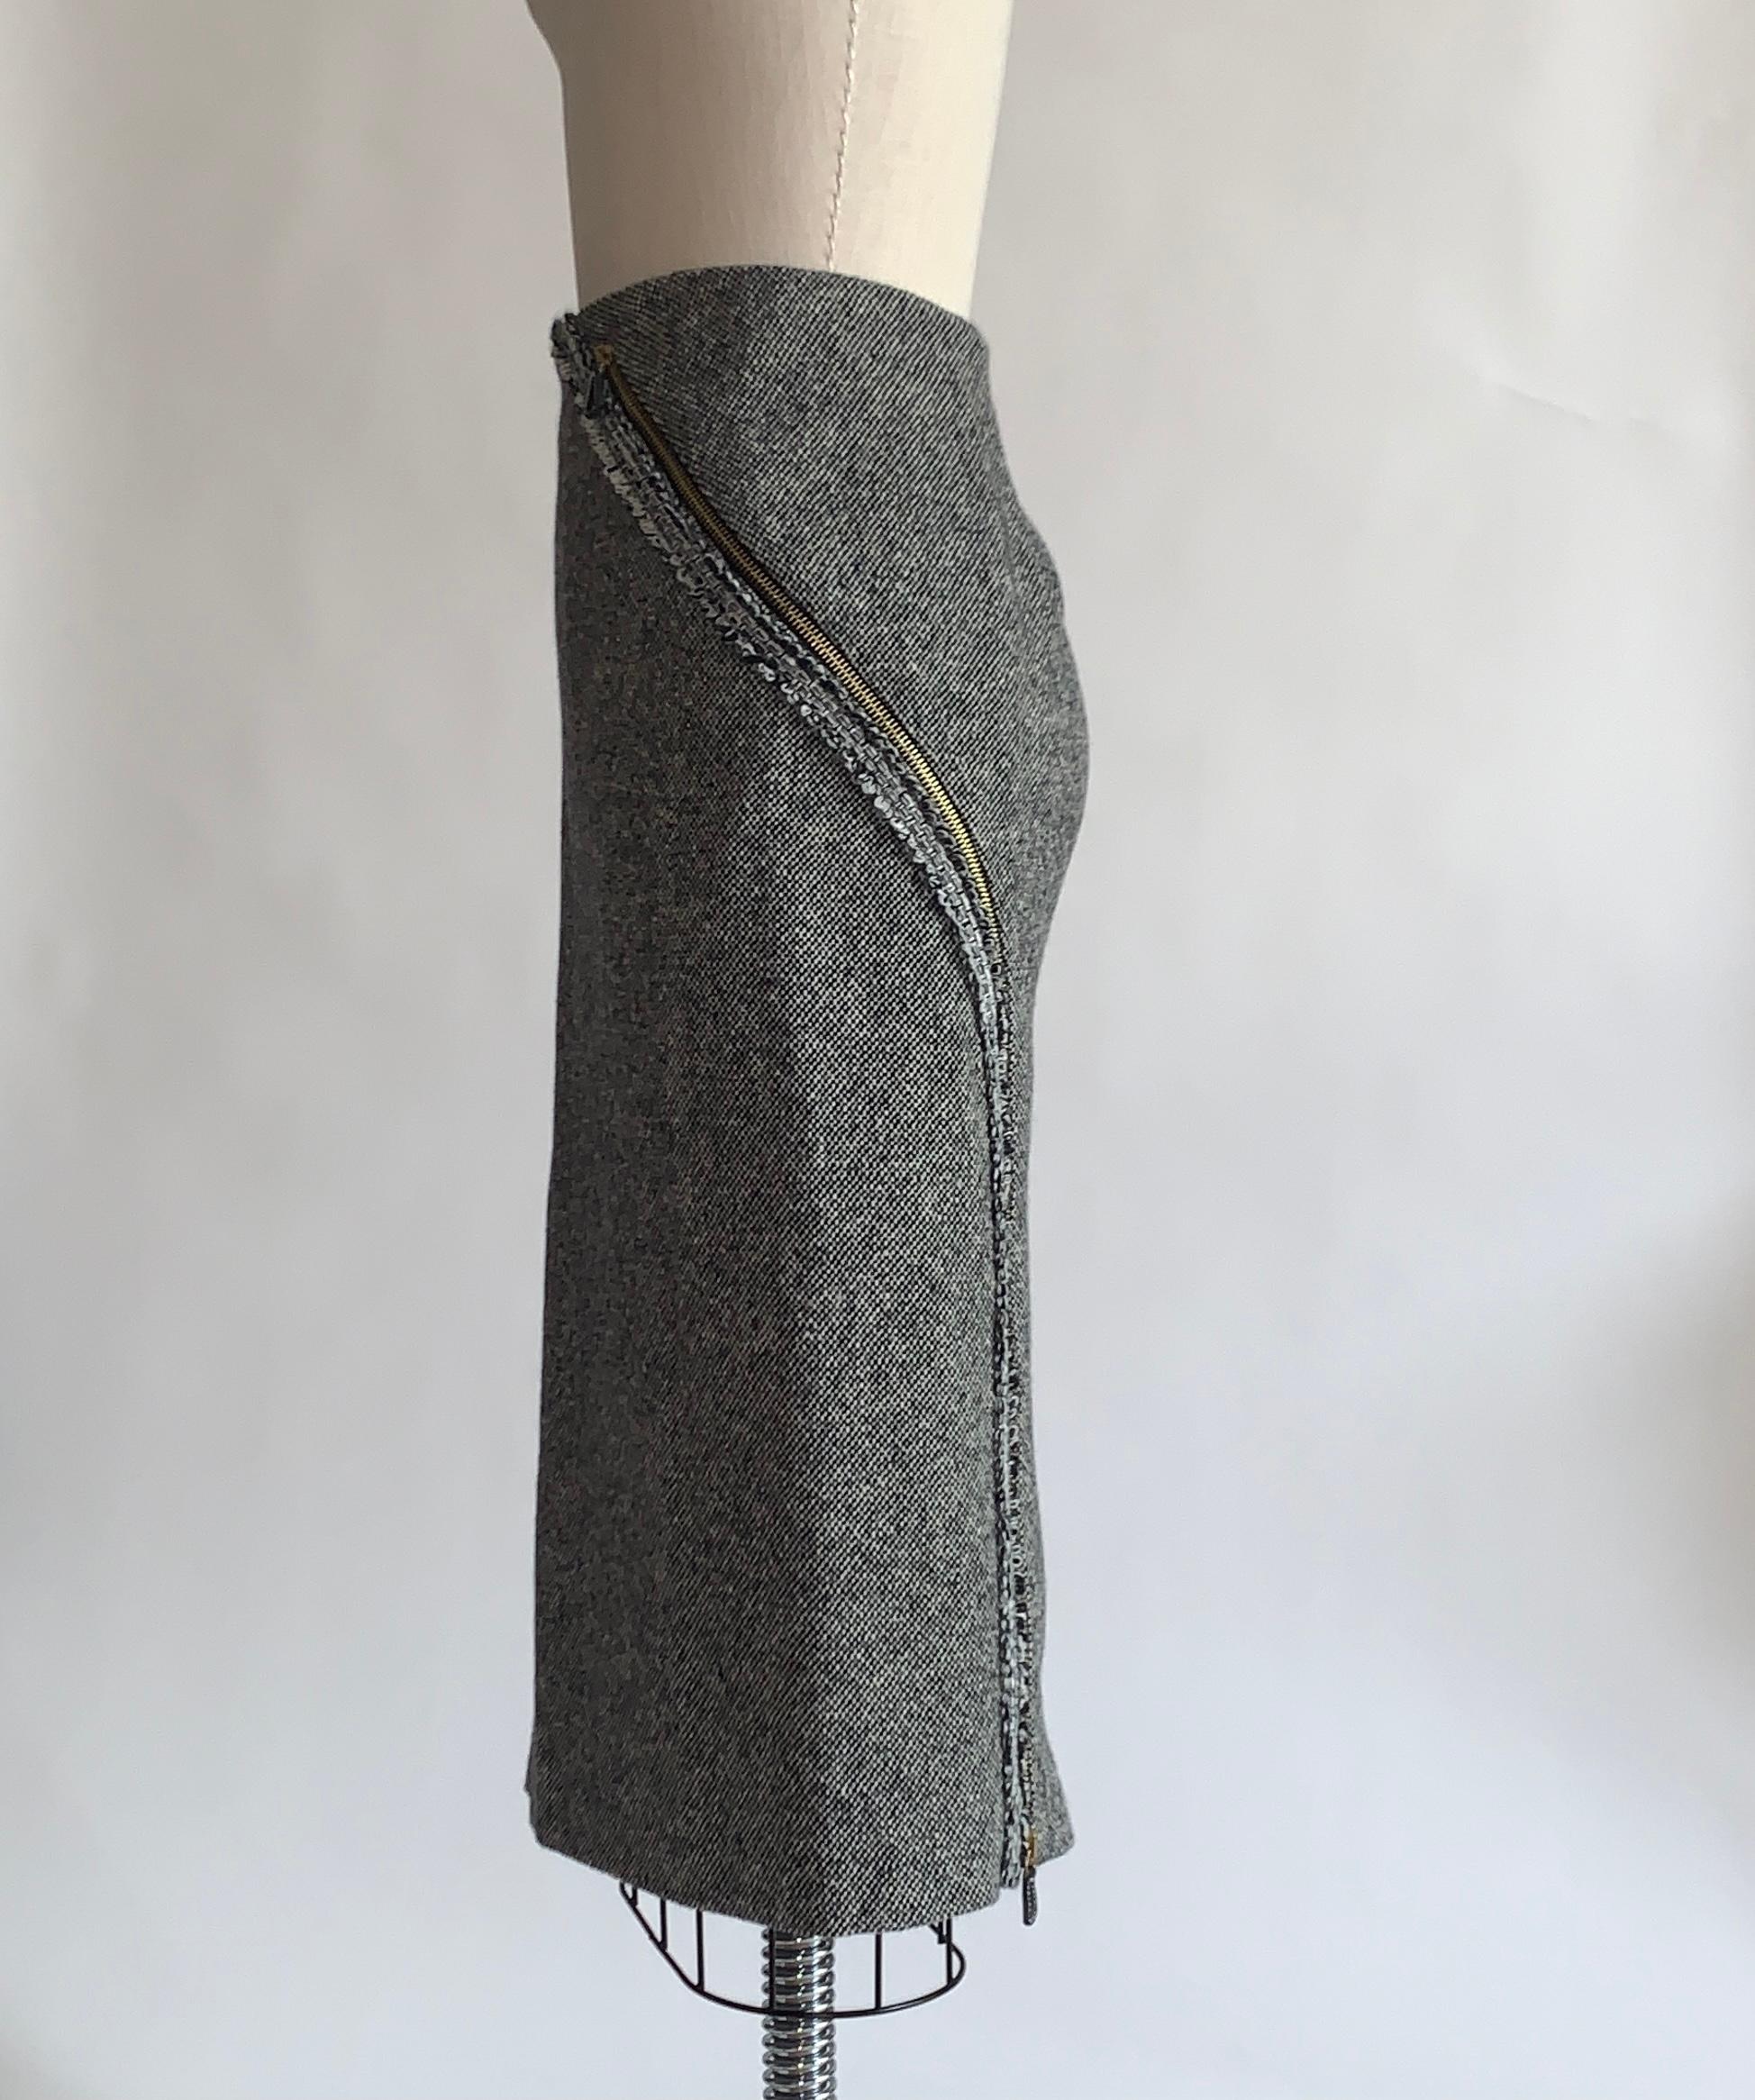 1950 pencil skirt